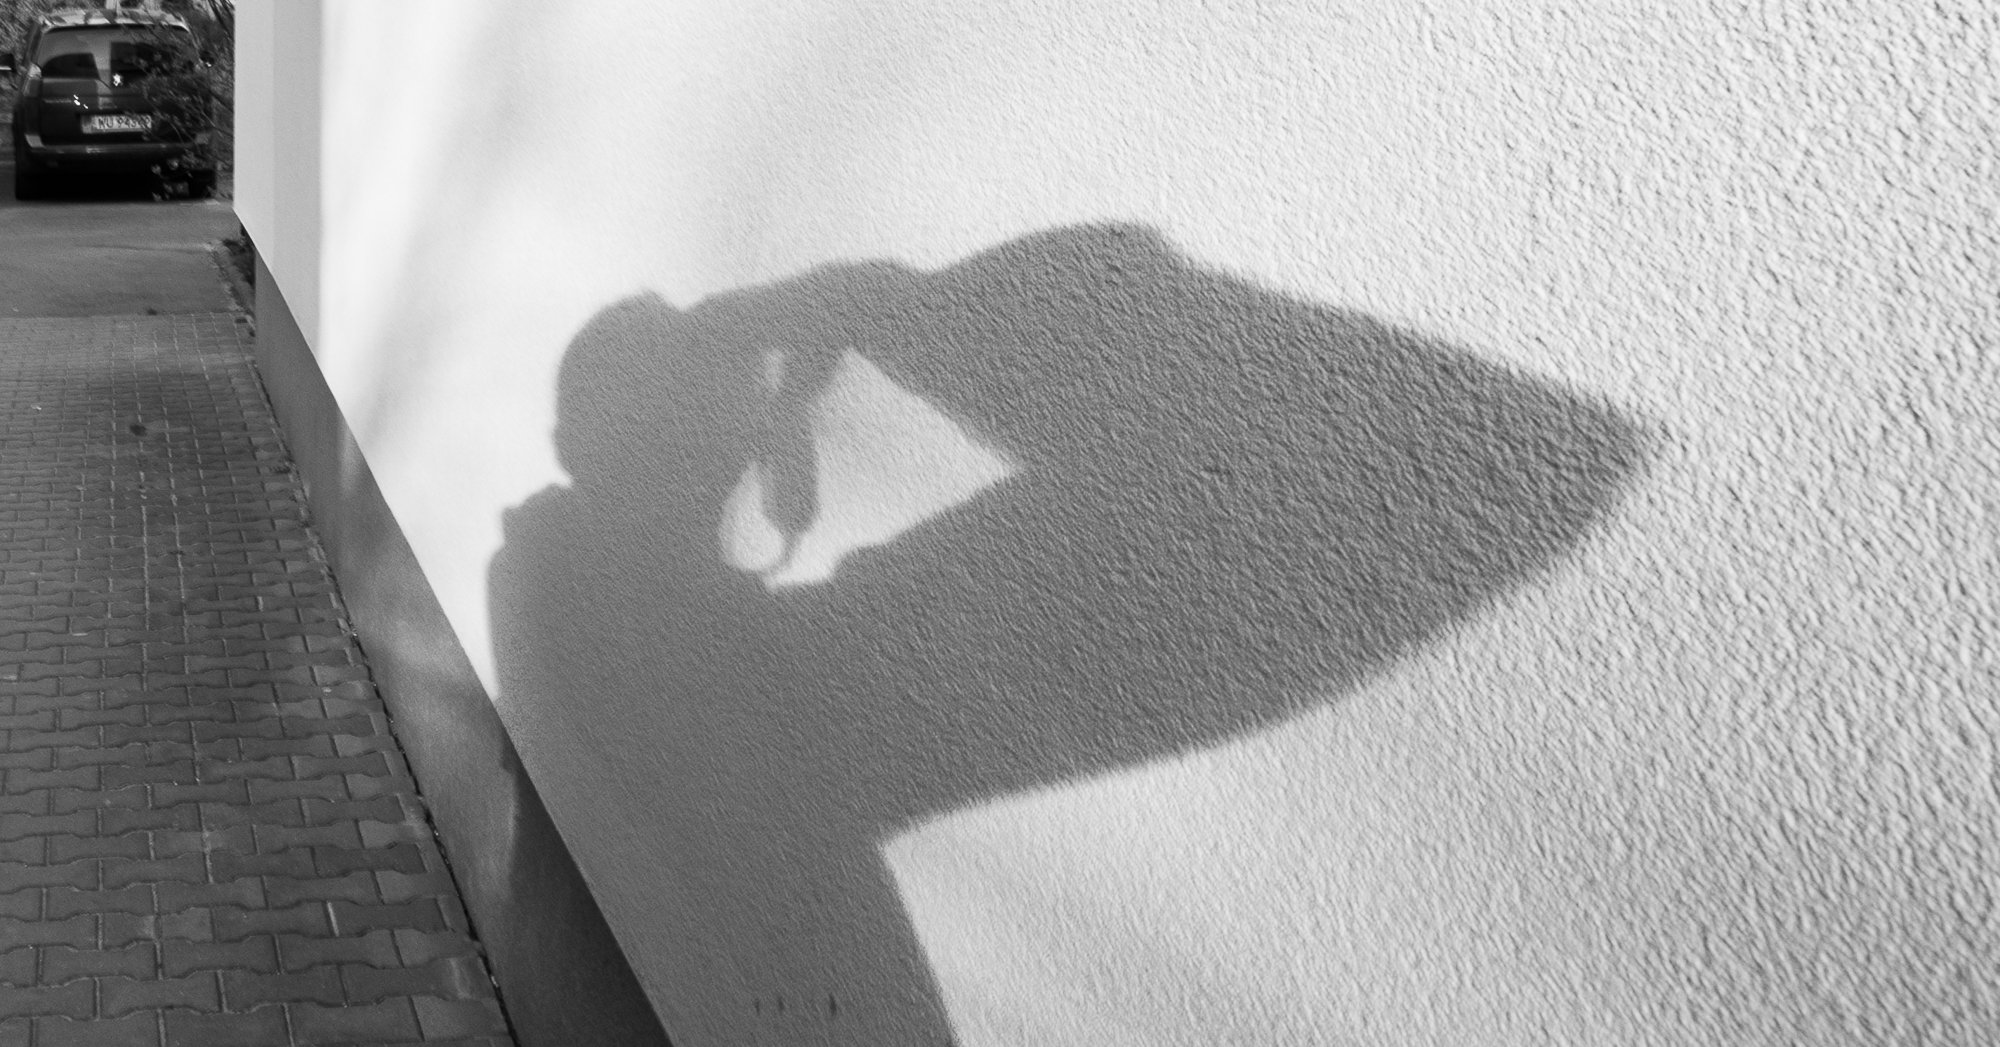 Adam Mazek Photography Warsaw (Warszawa) 2019. Post: "Escape." Minimalism. Shadow Selfie. Geometry. Featured image.